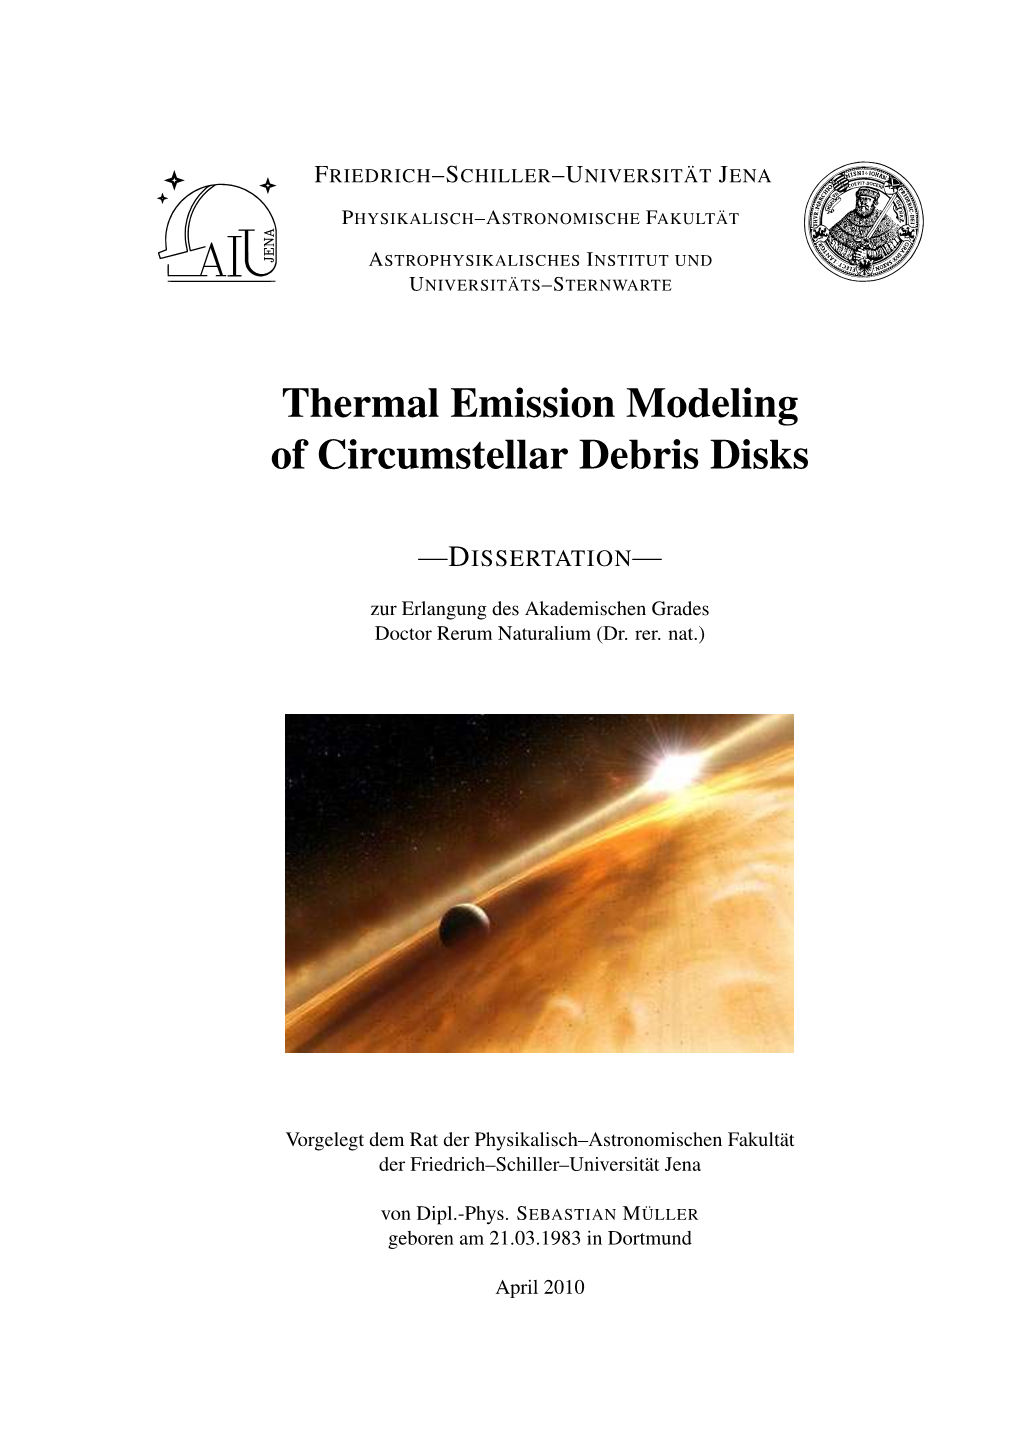 Thermal Emission Modeling of Circumstellar Debris Disks